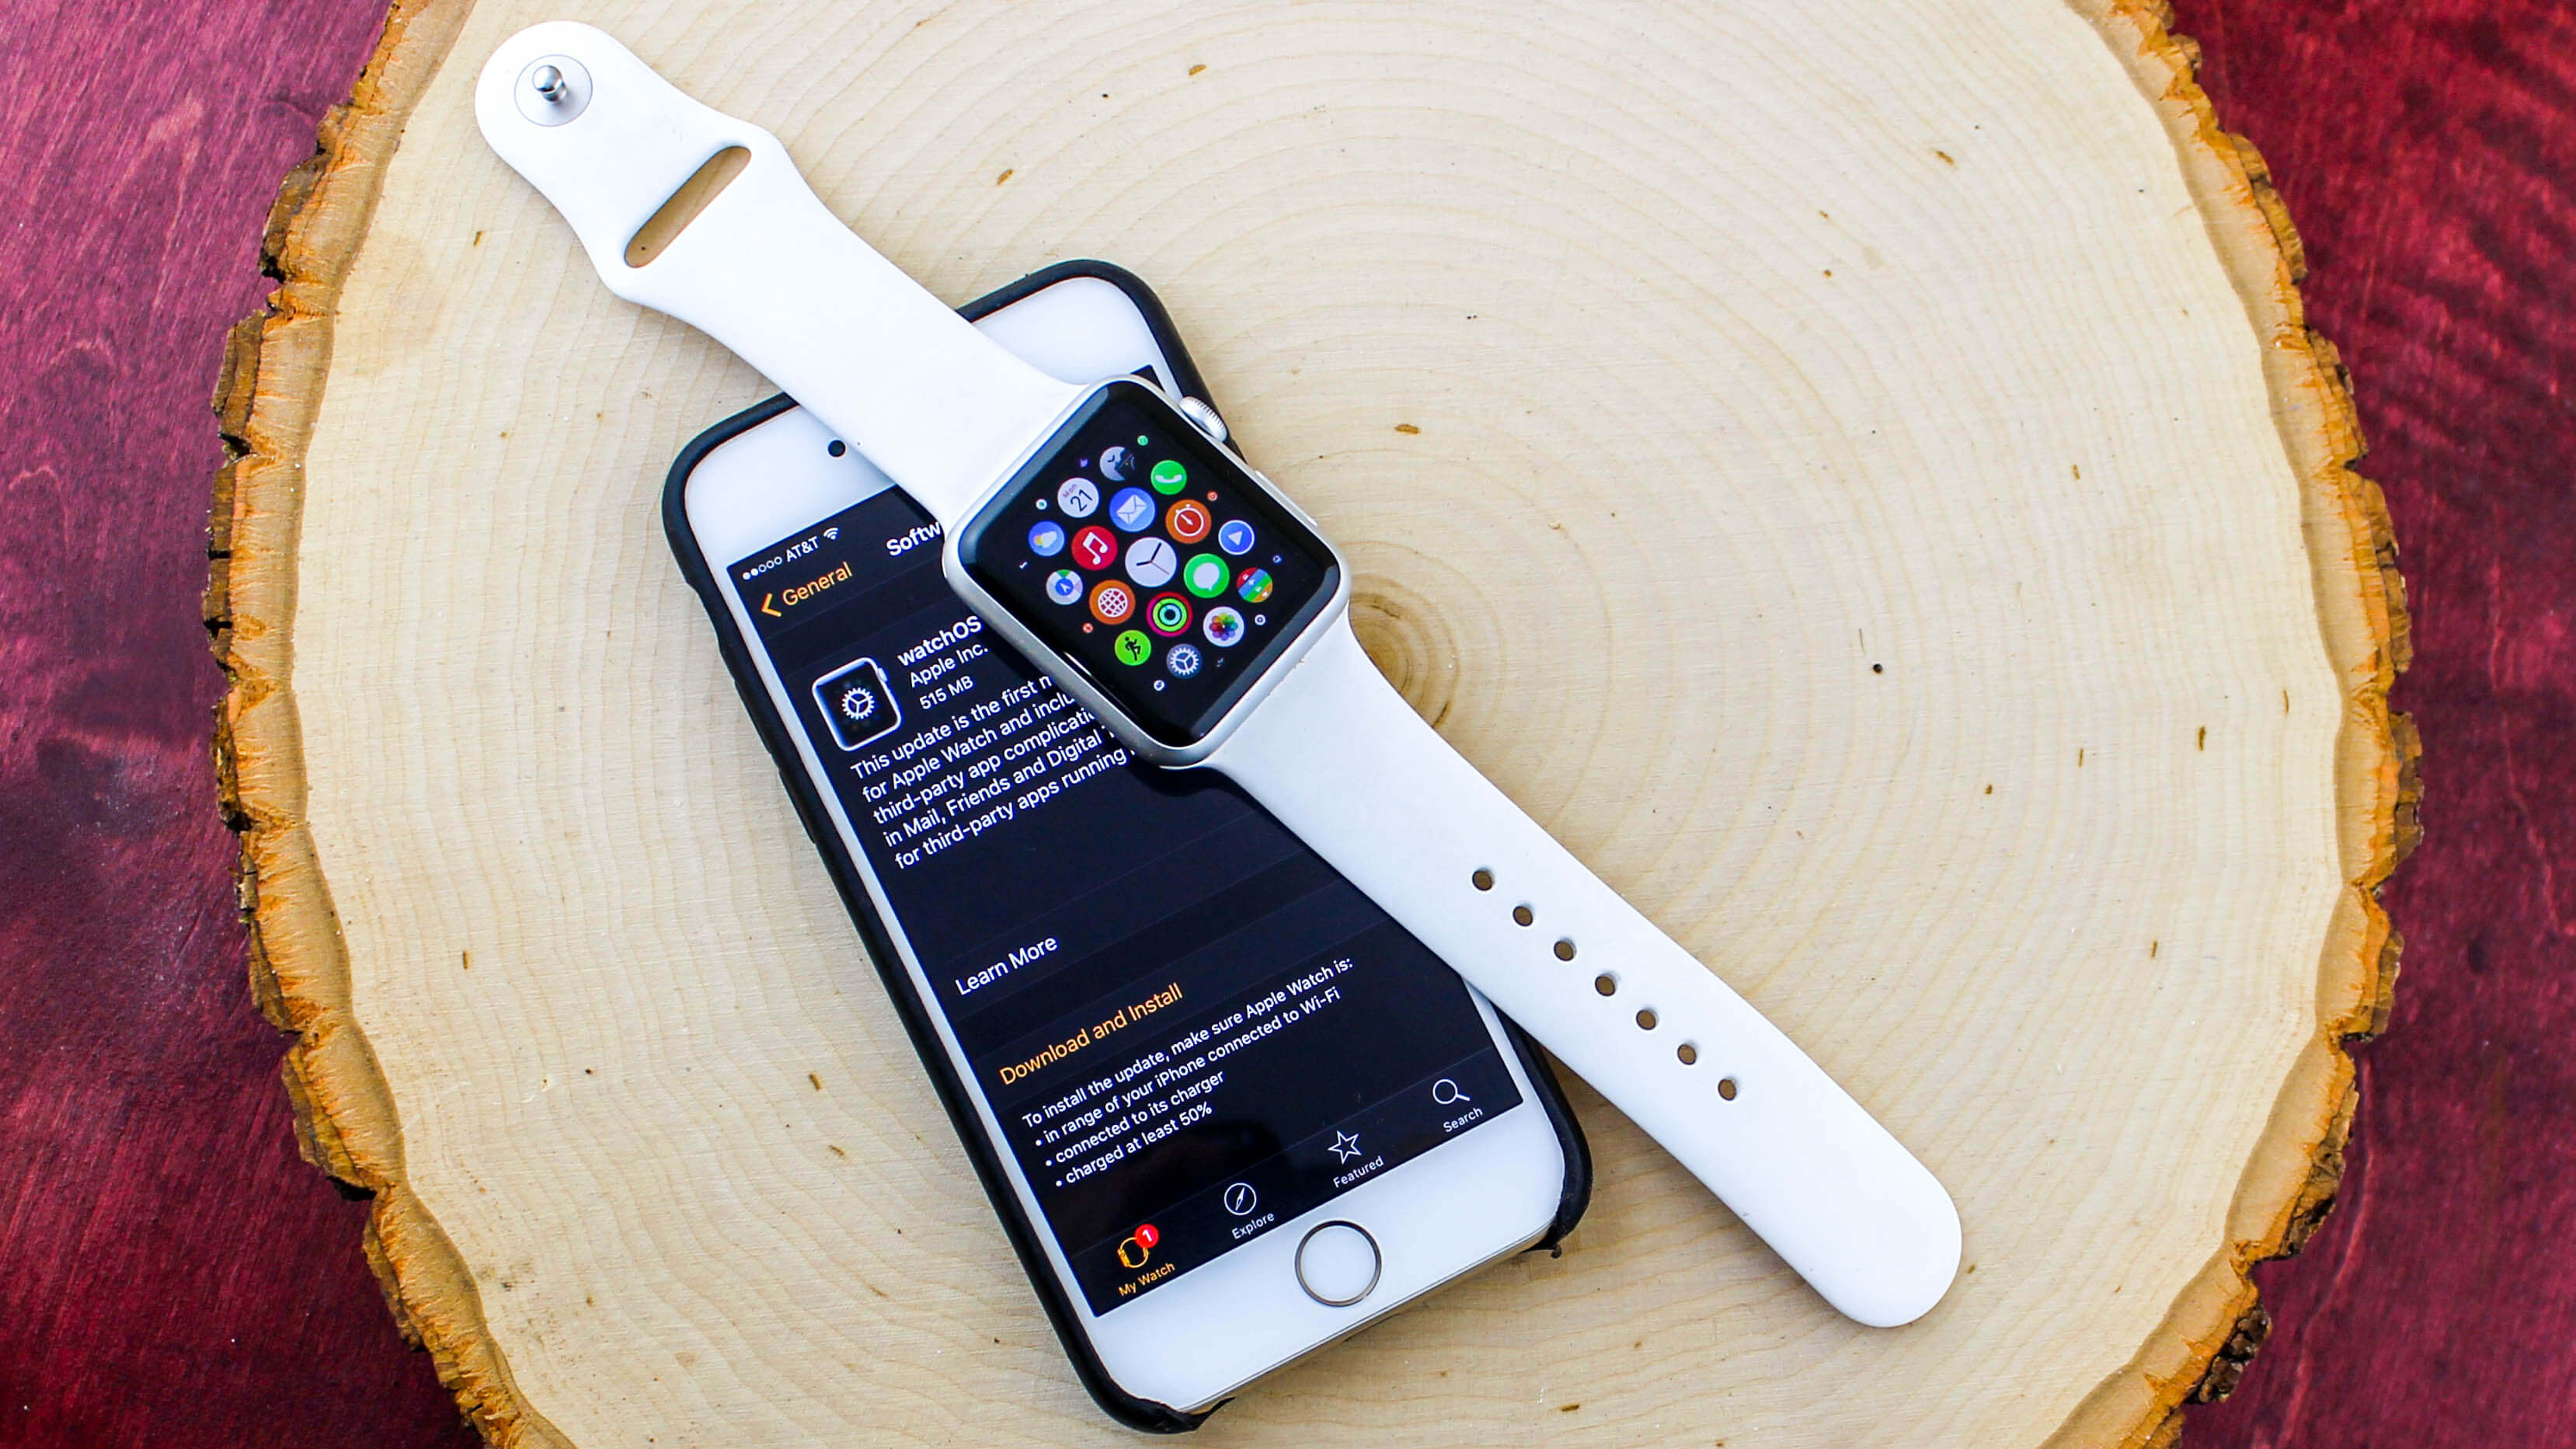 Apple fixes Walkie Talkie vulnerability with watchOS update